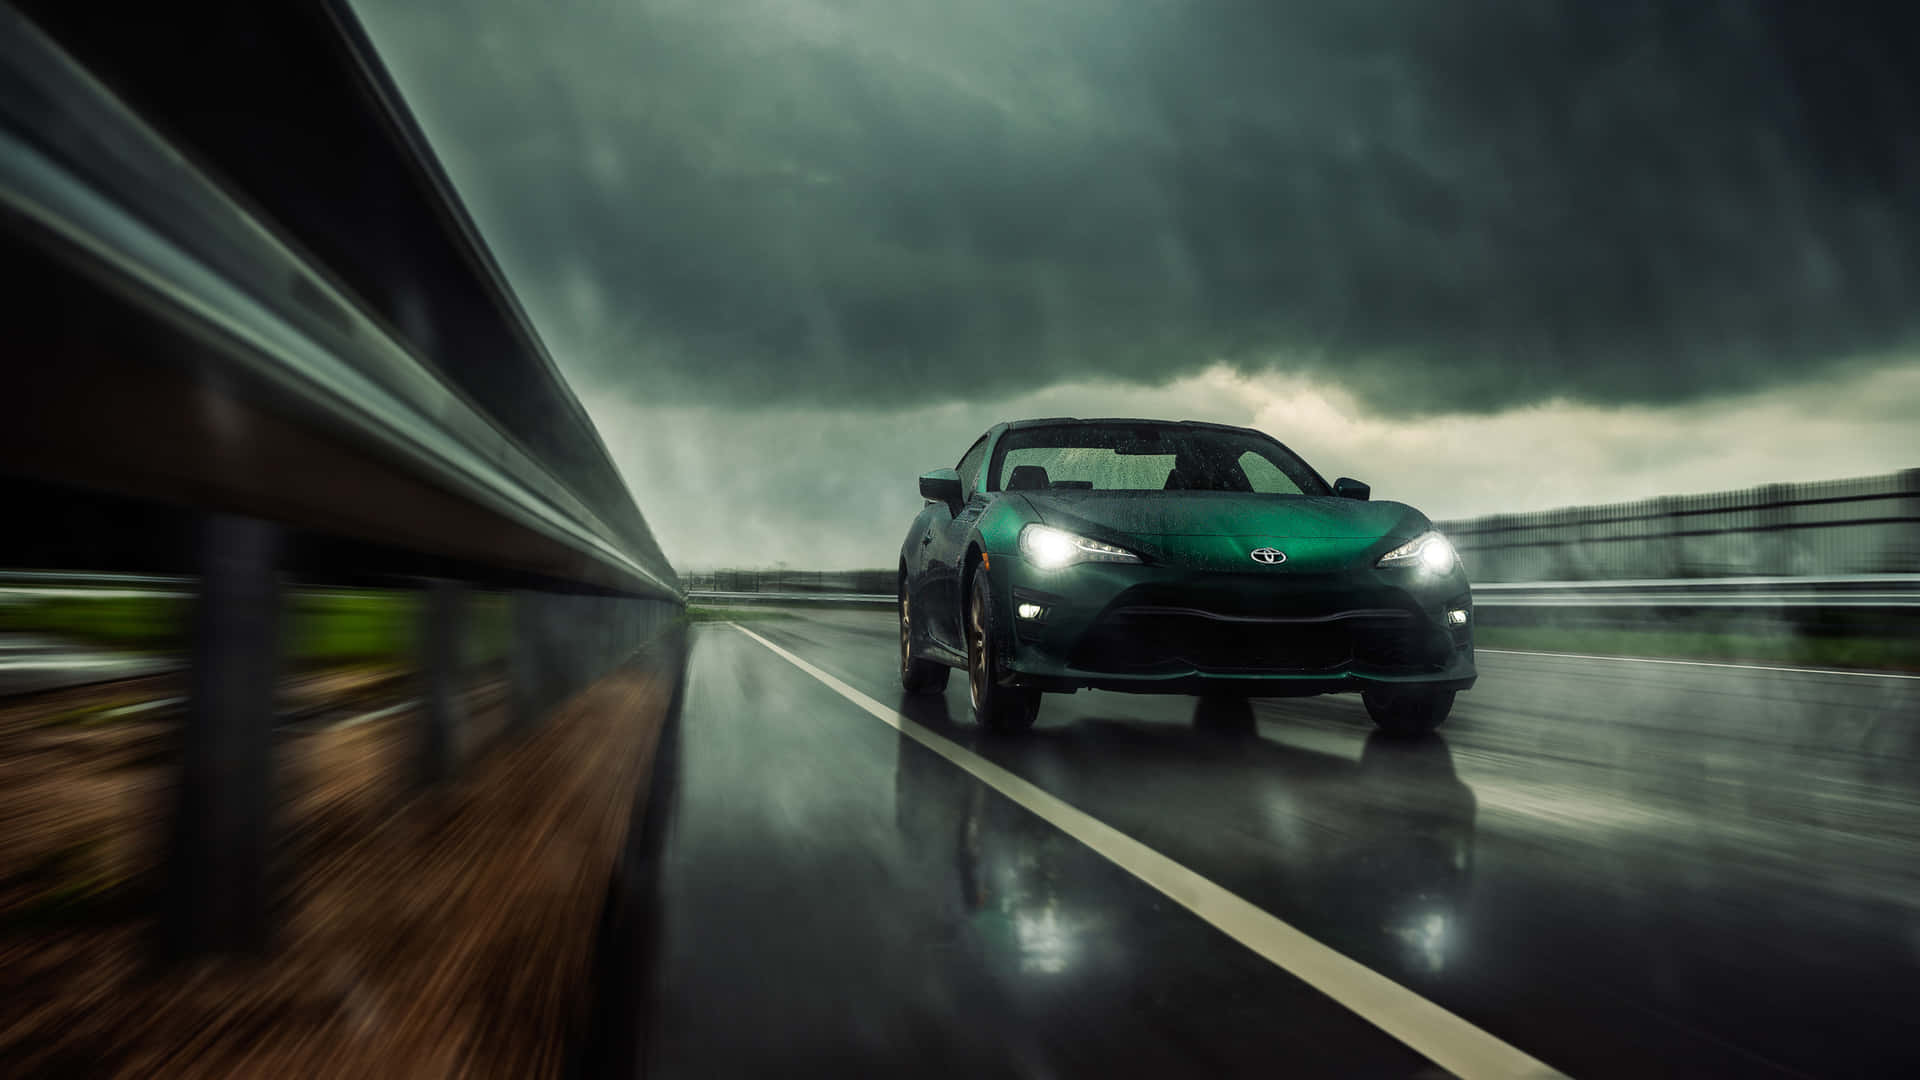 A Green Car Driving On A Rainy Road Wallpaper